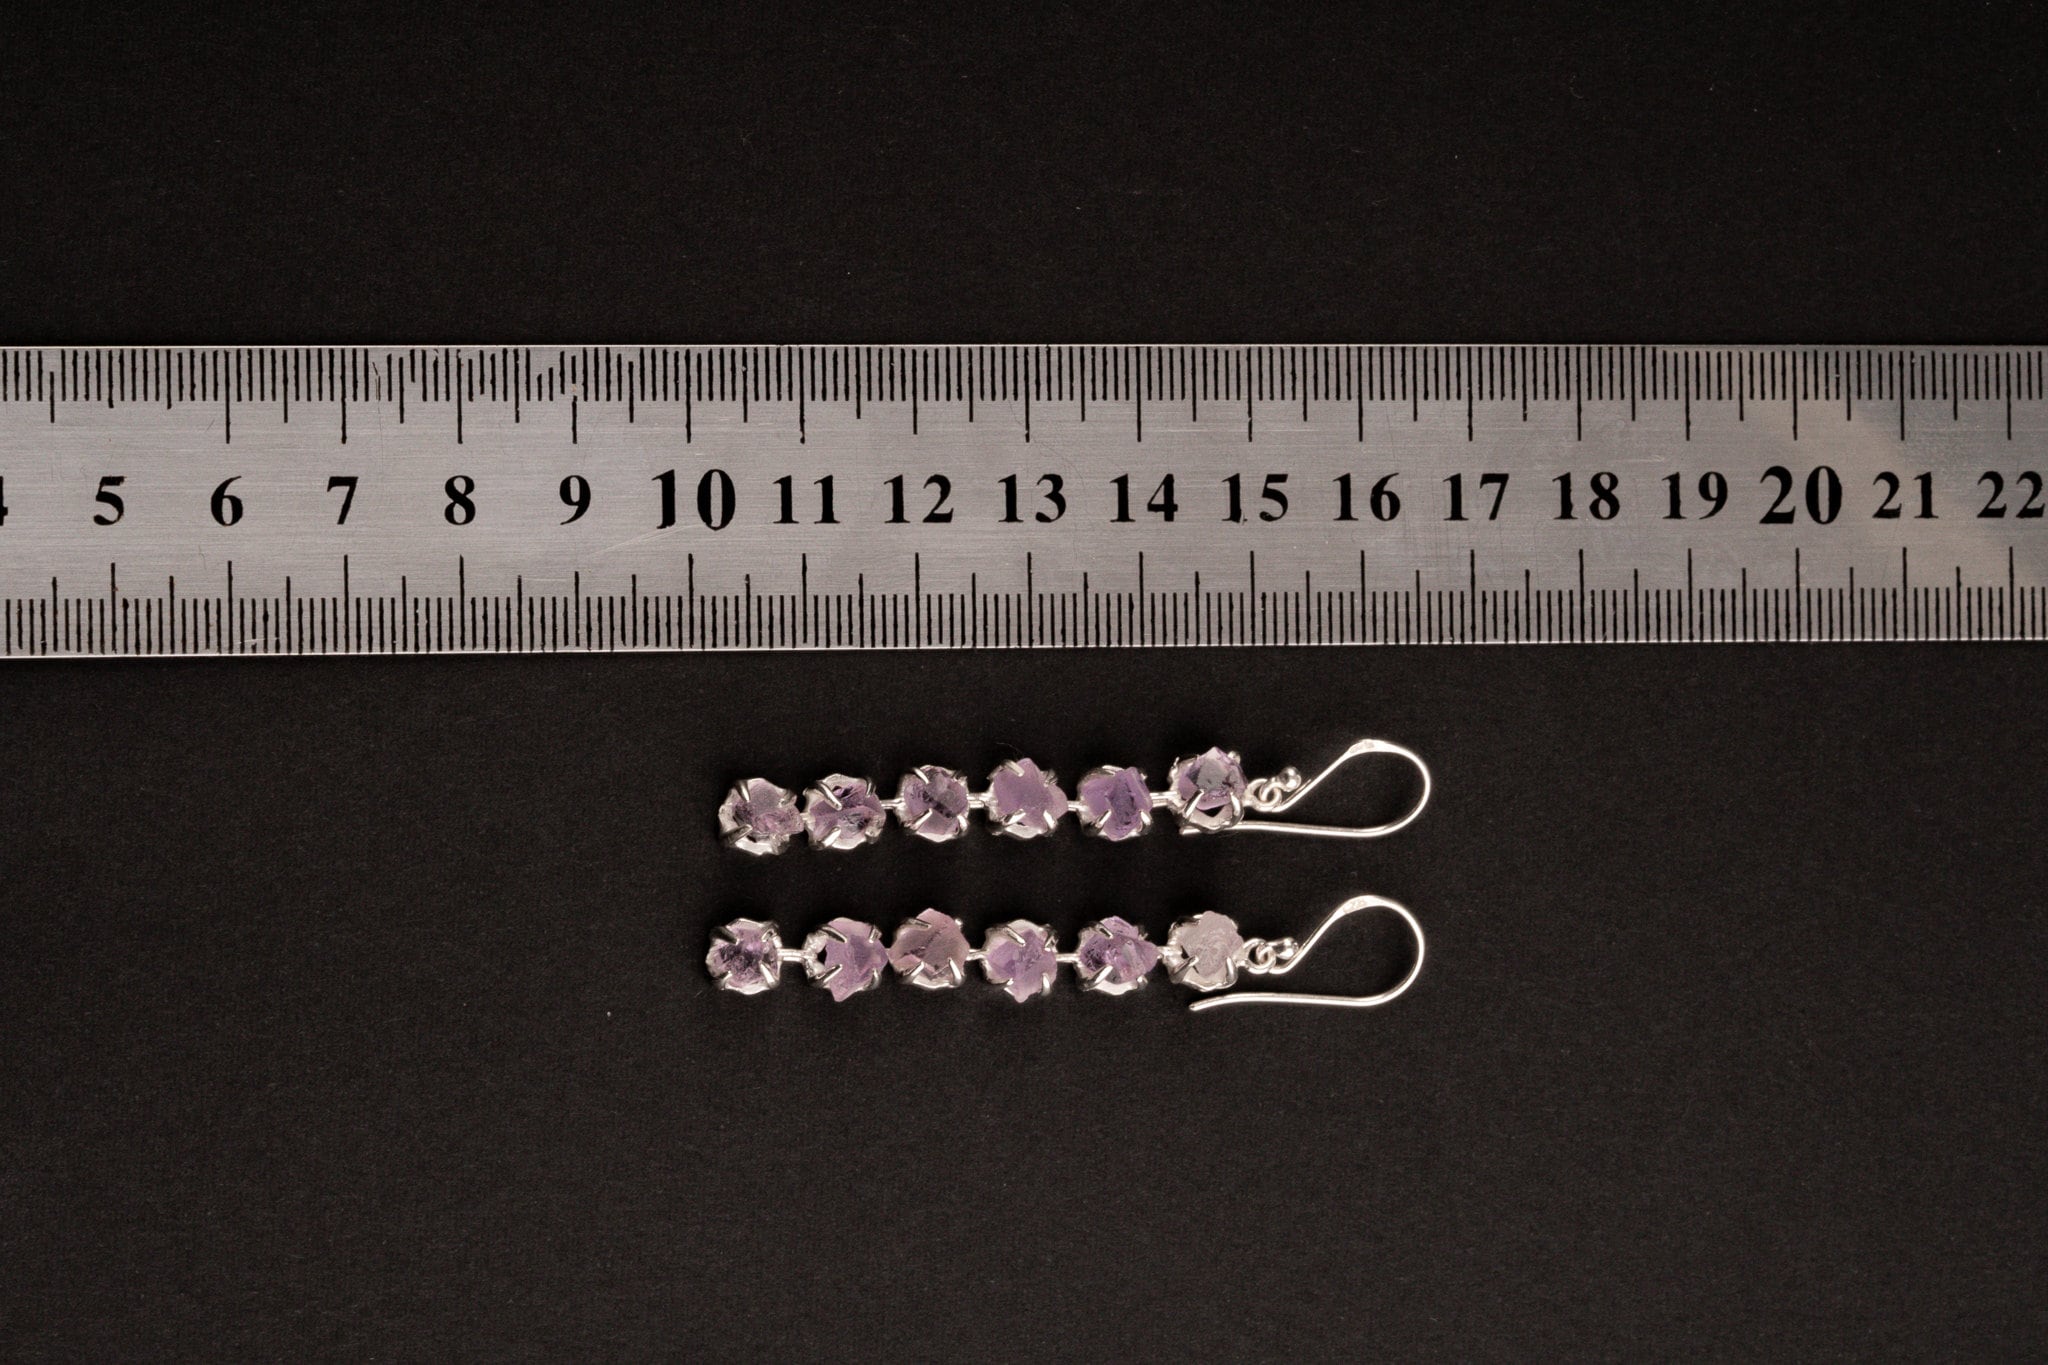 6 Raw deep purple Amethyst gem - Sterling Silver - Claw / Prong dangle hook crystal Earring